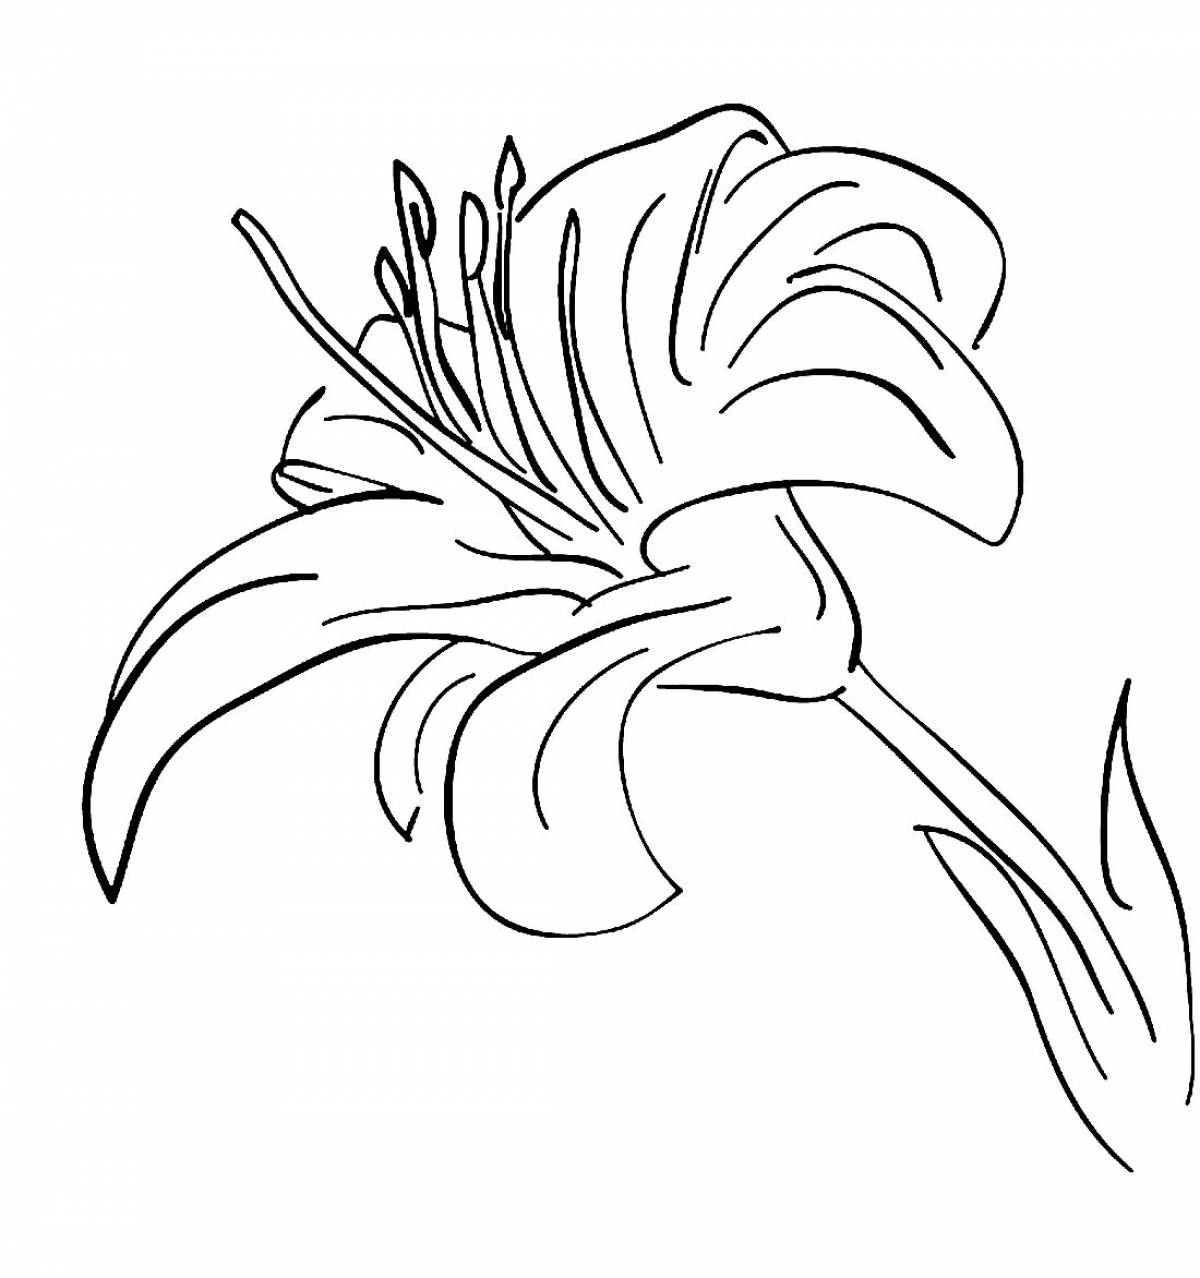 Радостная морская лилия раскраска